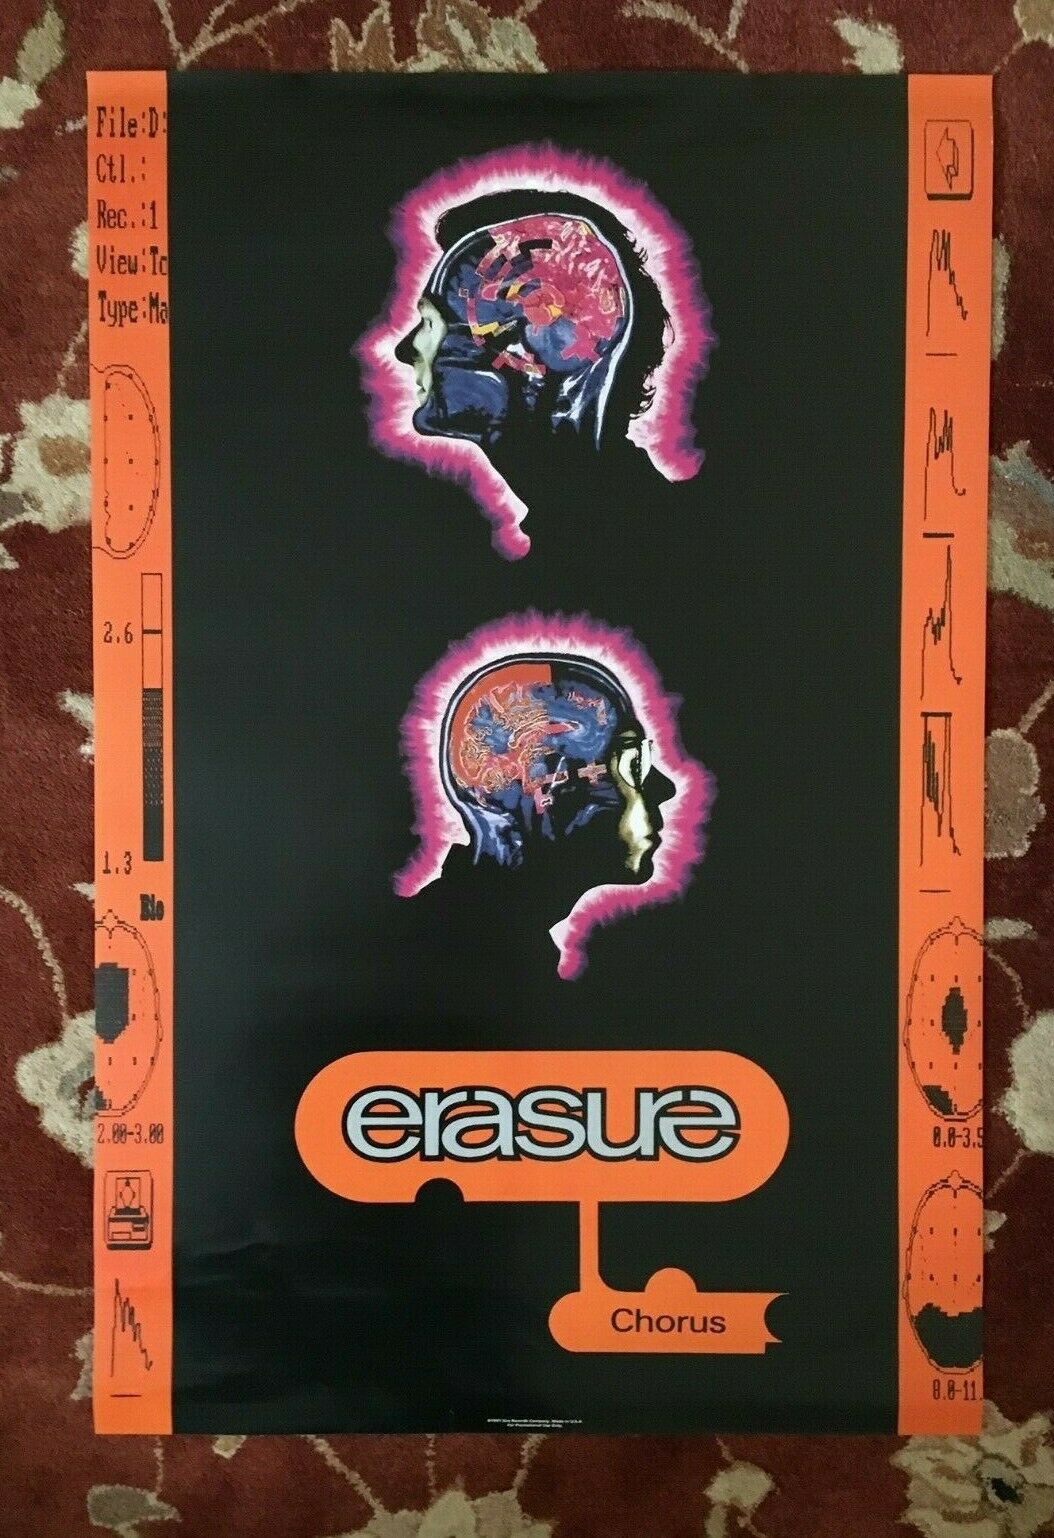 Erasure  Chorus  Rare Original Promotional Poster From 1991